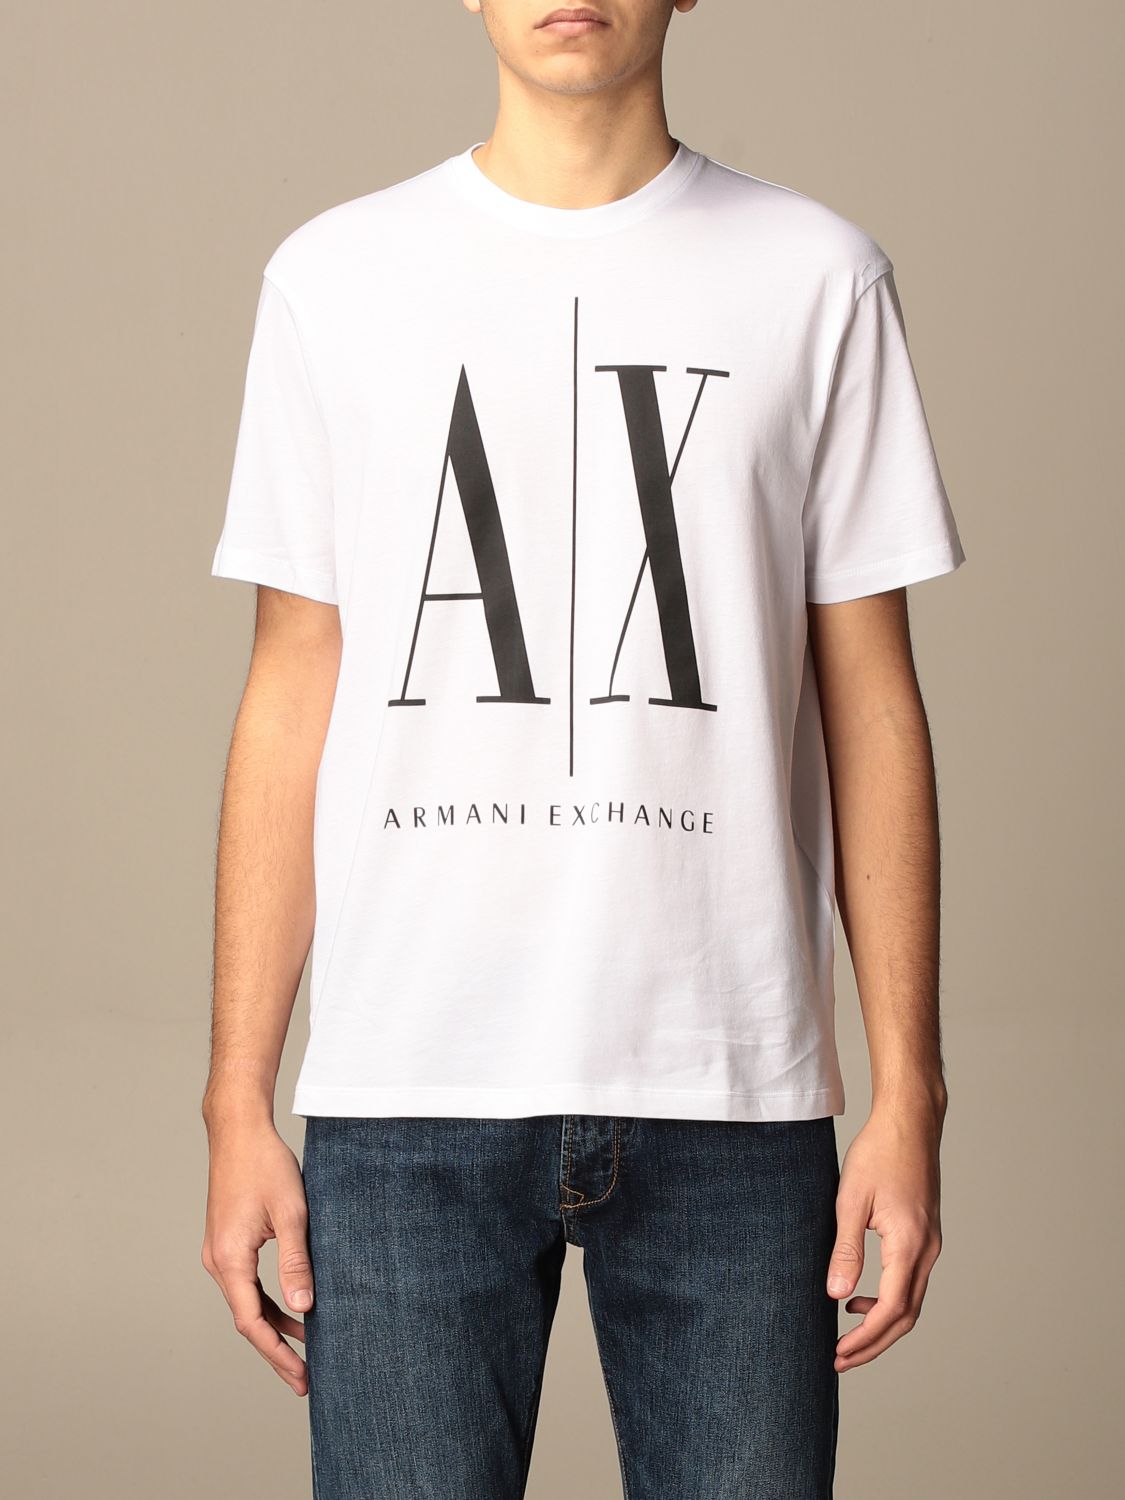 ARMANI EXCHANGE: T-shirt with AX logo - White | Armani Exchange t-shirt  8NZTPA ZJH4Z online on 